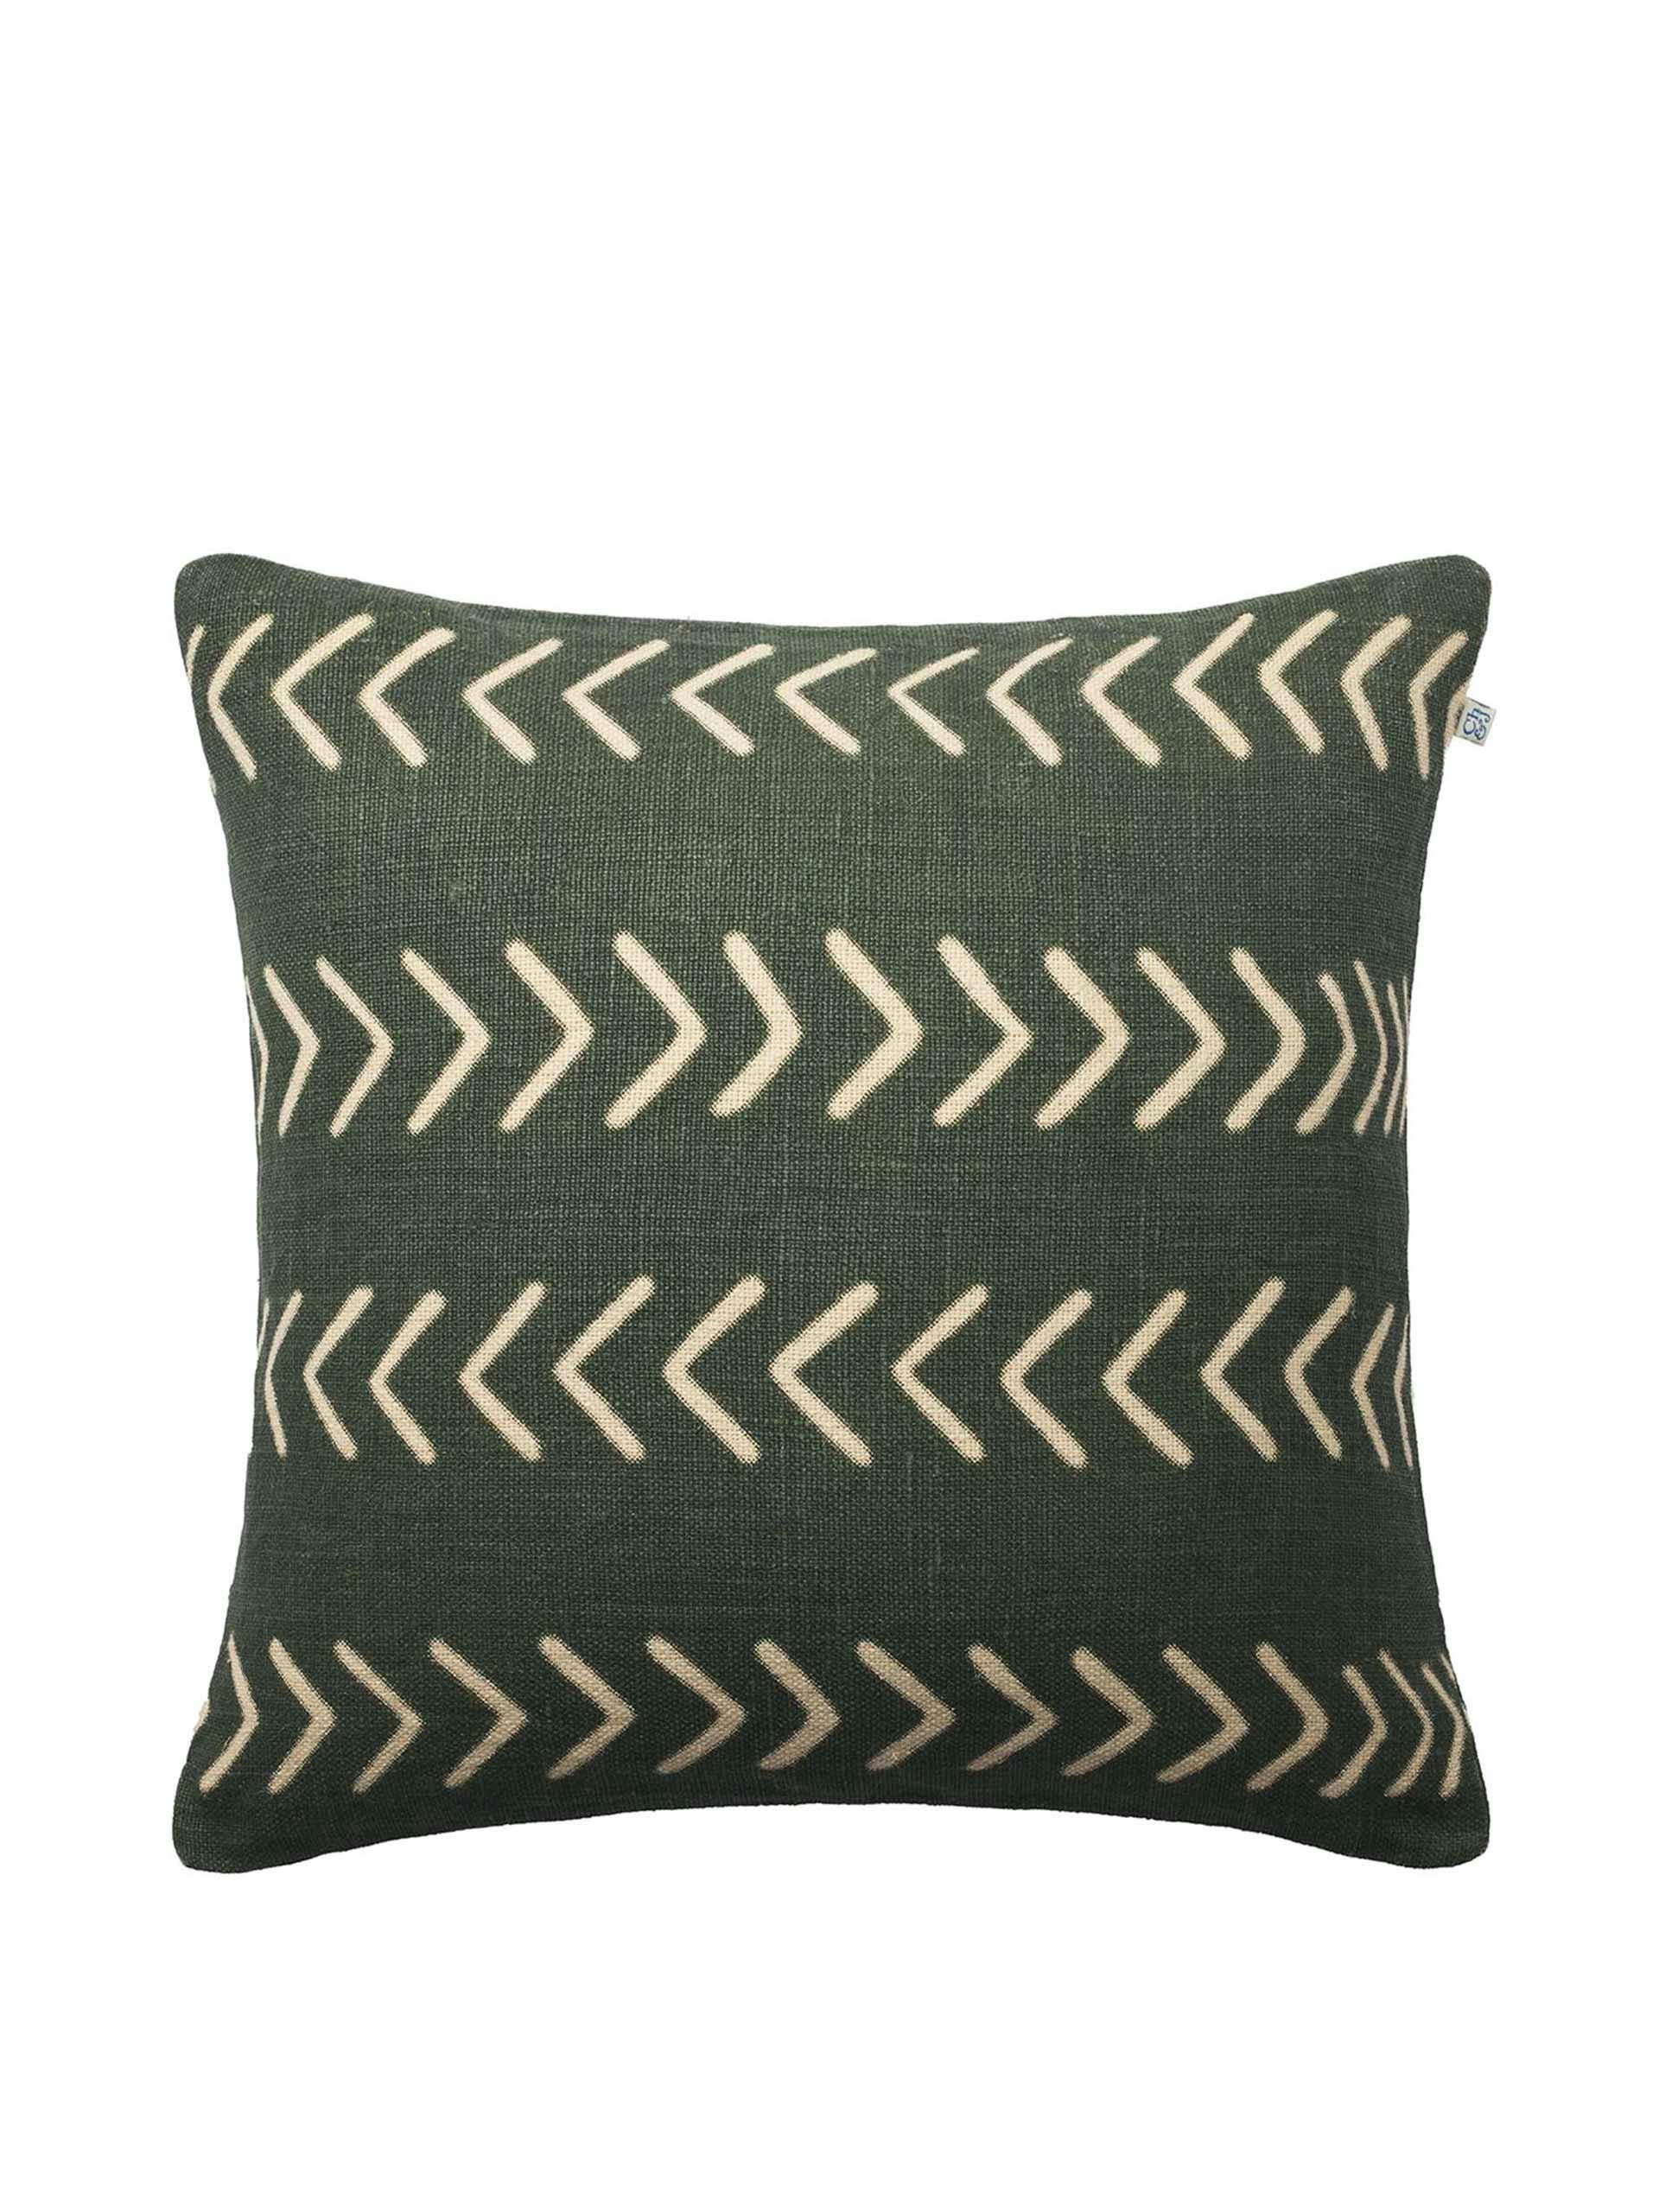 Green arrow pattern cushion